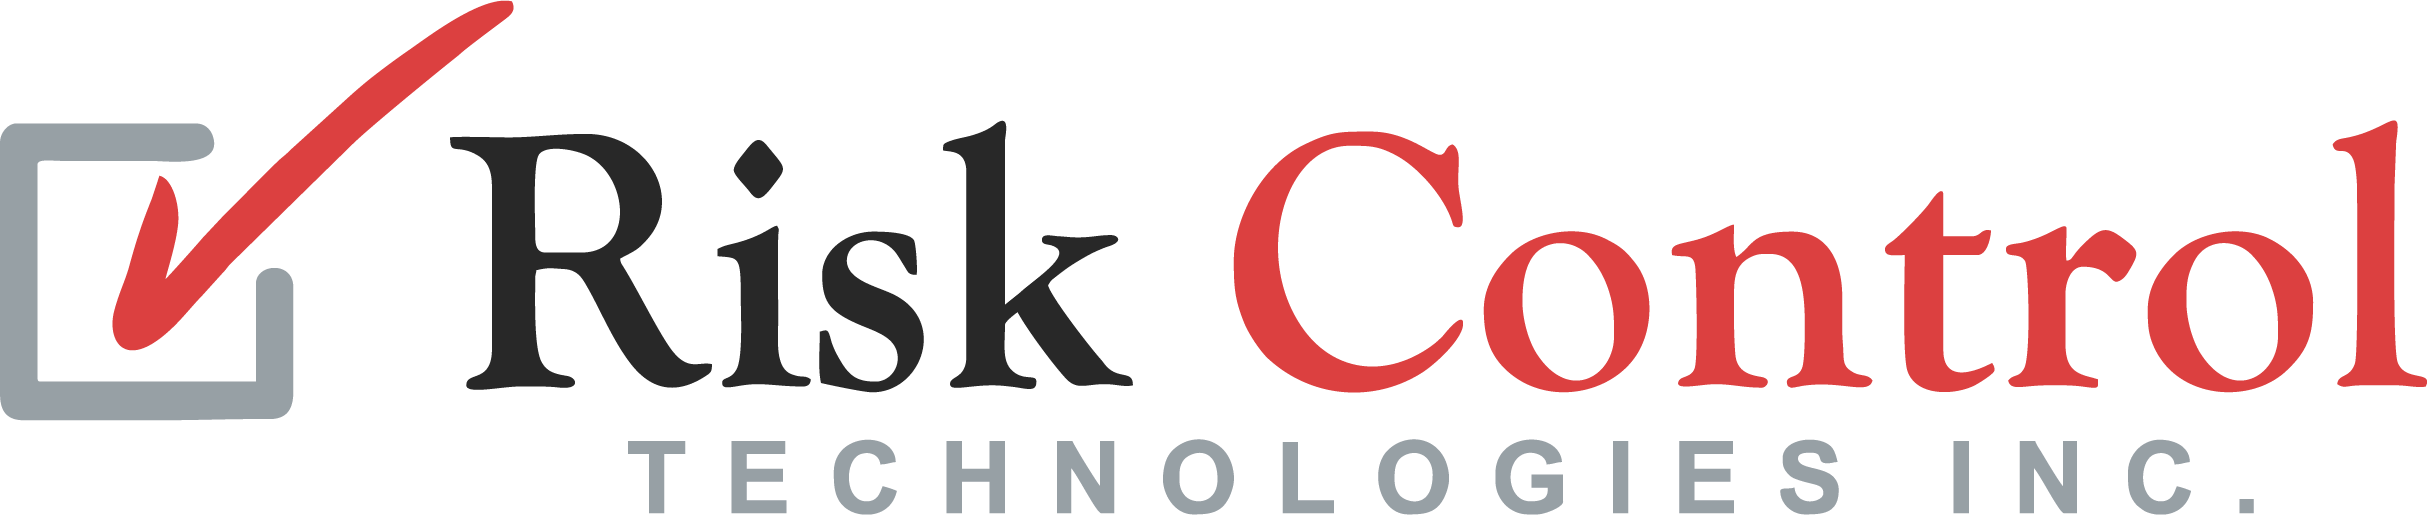 Risk Control Technologies Inc logo